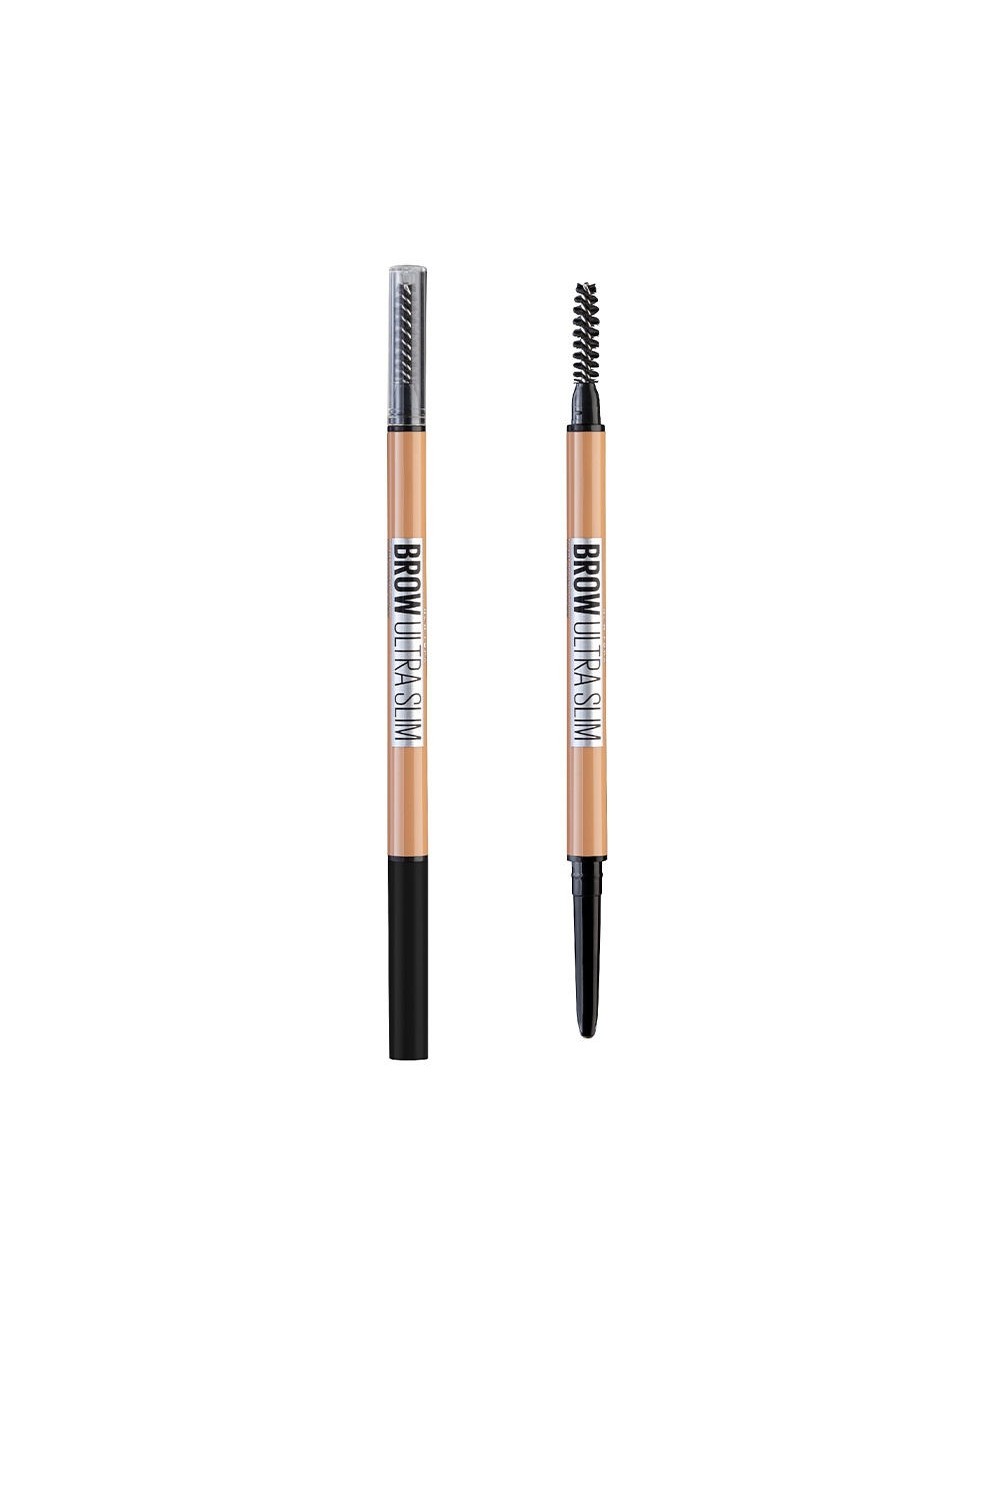 Maybelline Brow Ultra Slim Defining Eyebrow Pencil 00 Light Blond